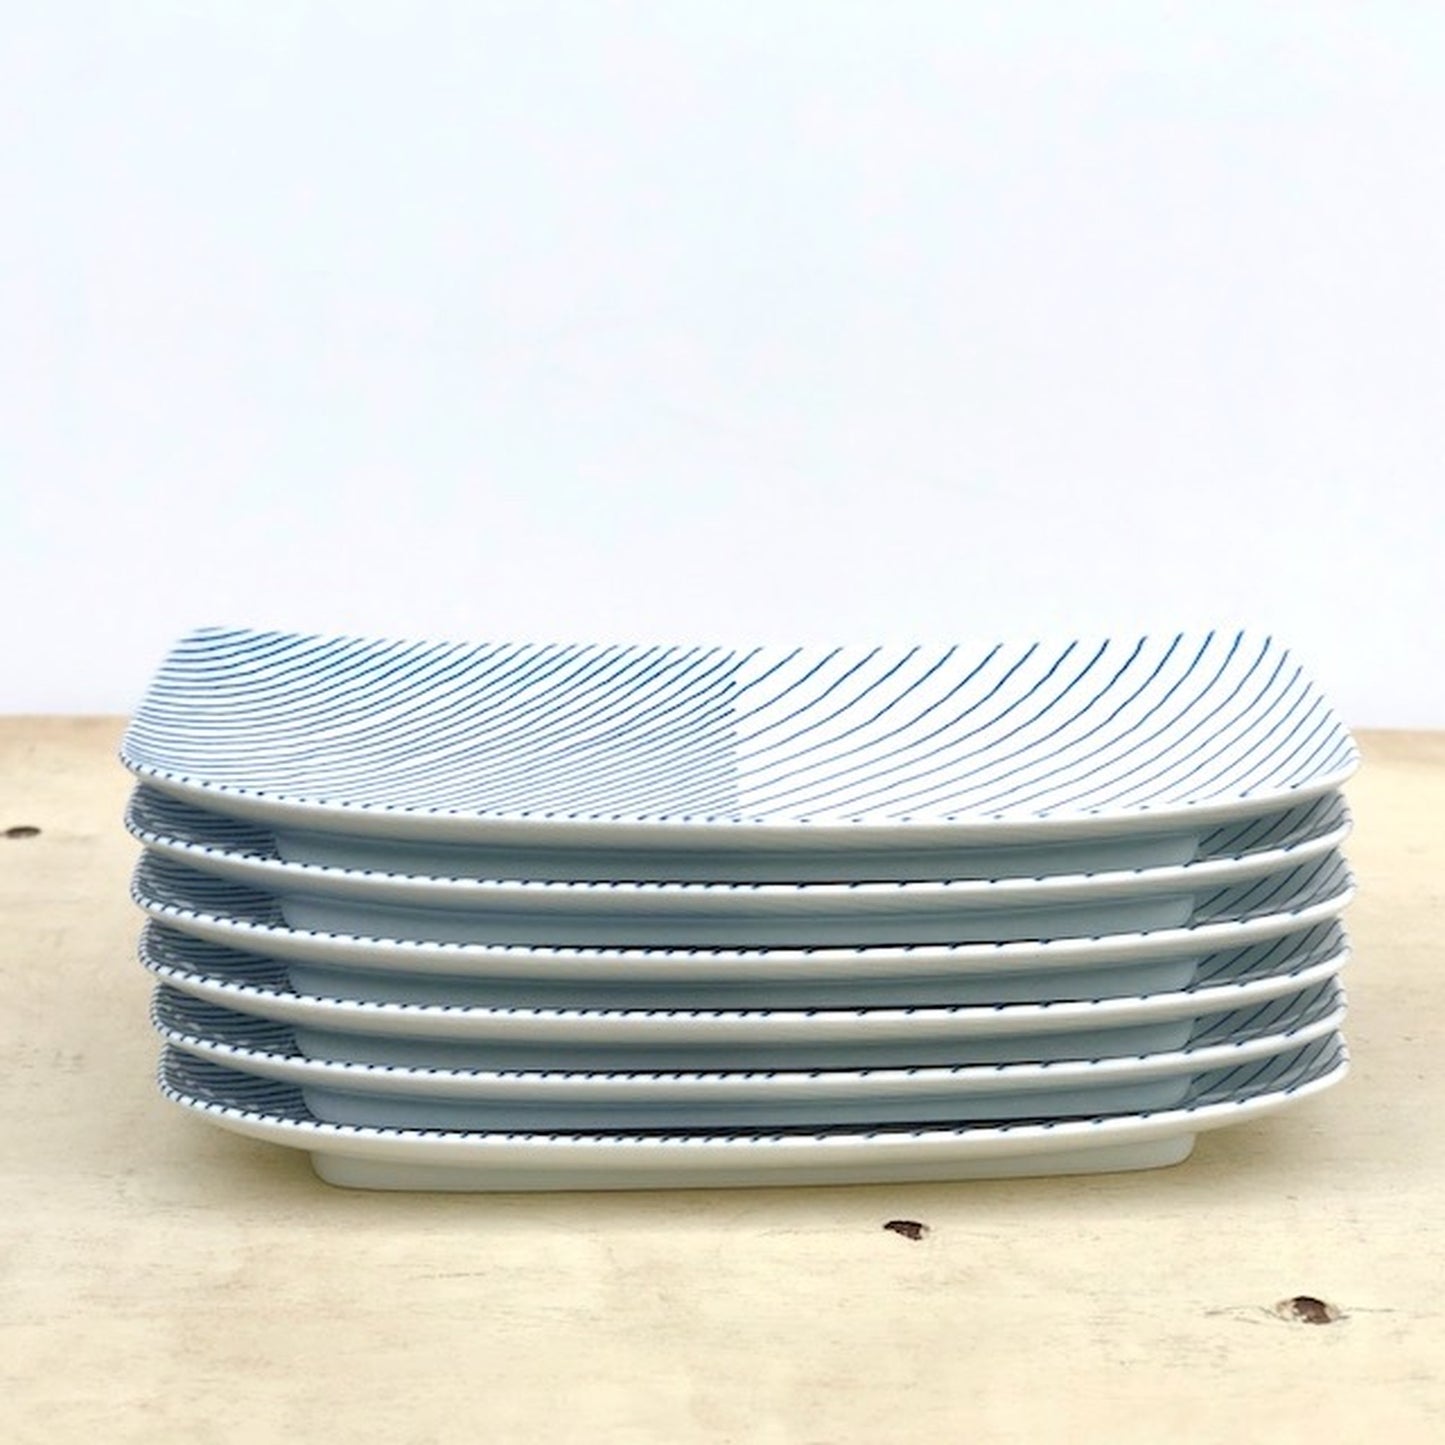 [Hasami ware] [Hakusan pottery] [Layered stripes] [Nagayaki plate] Long plate Long angle plate Fish plate hakusan